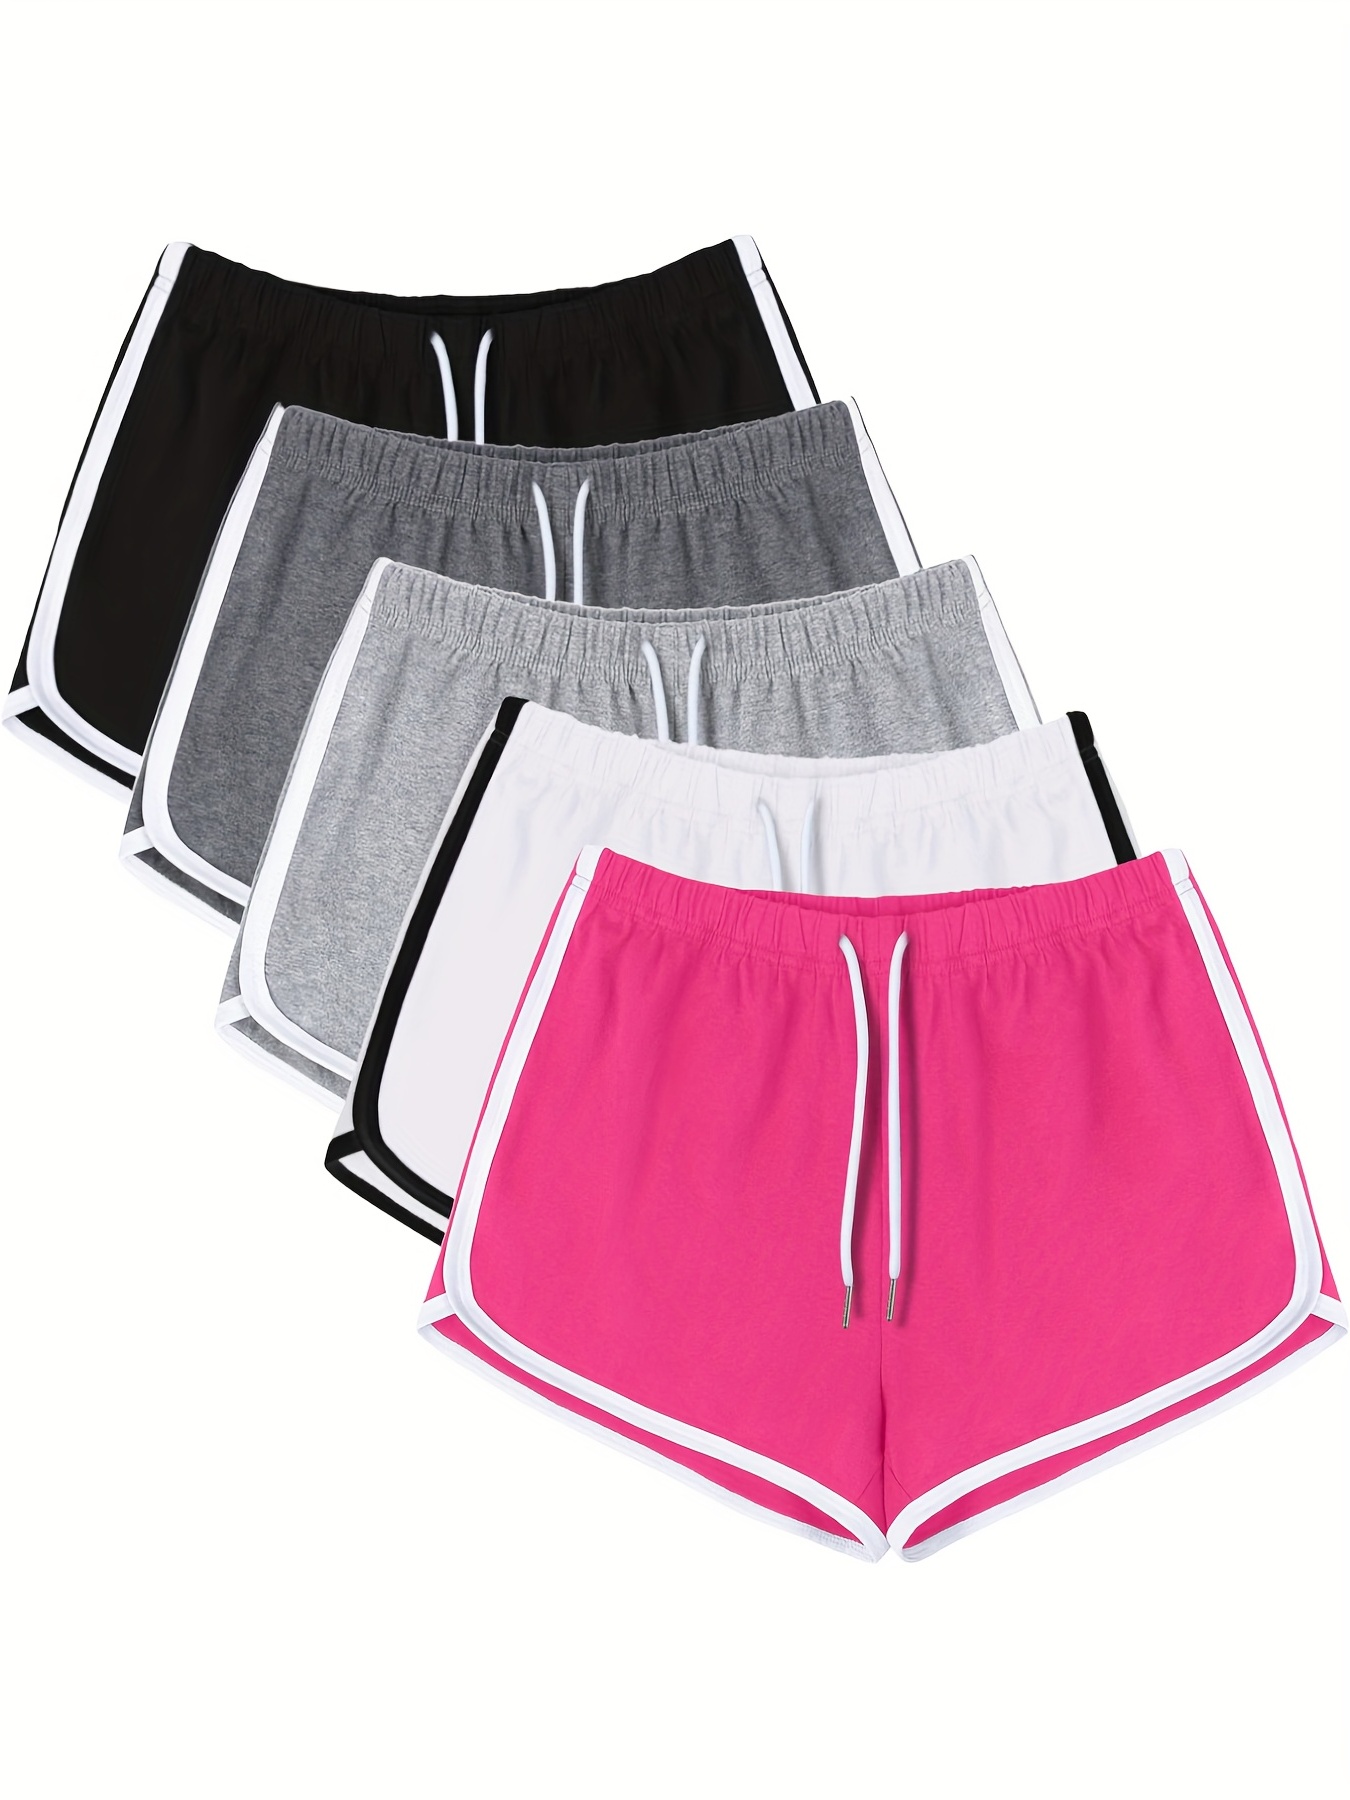 Yoga shorts for women Fashion Women's Irregular Ladies Casual Pants Elastic  Waist Yoga Shorts crz yoga leggings yoga mats for home workout Pink L 